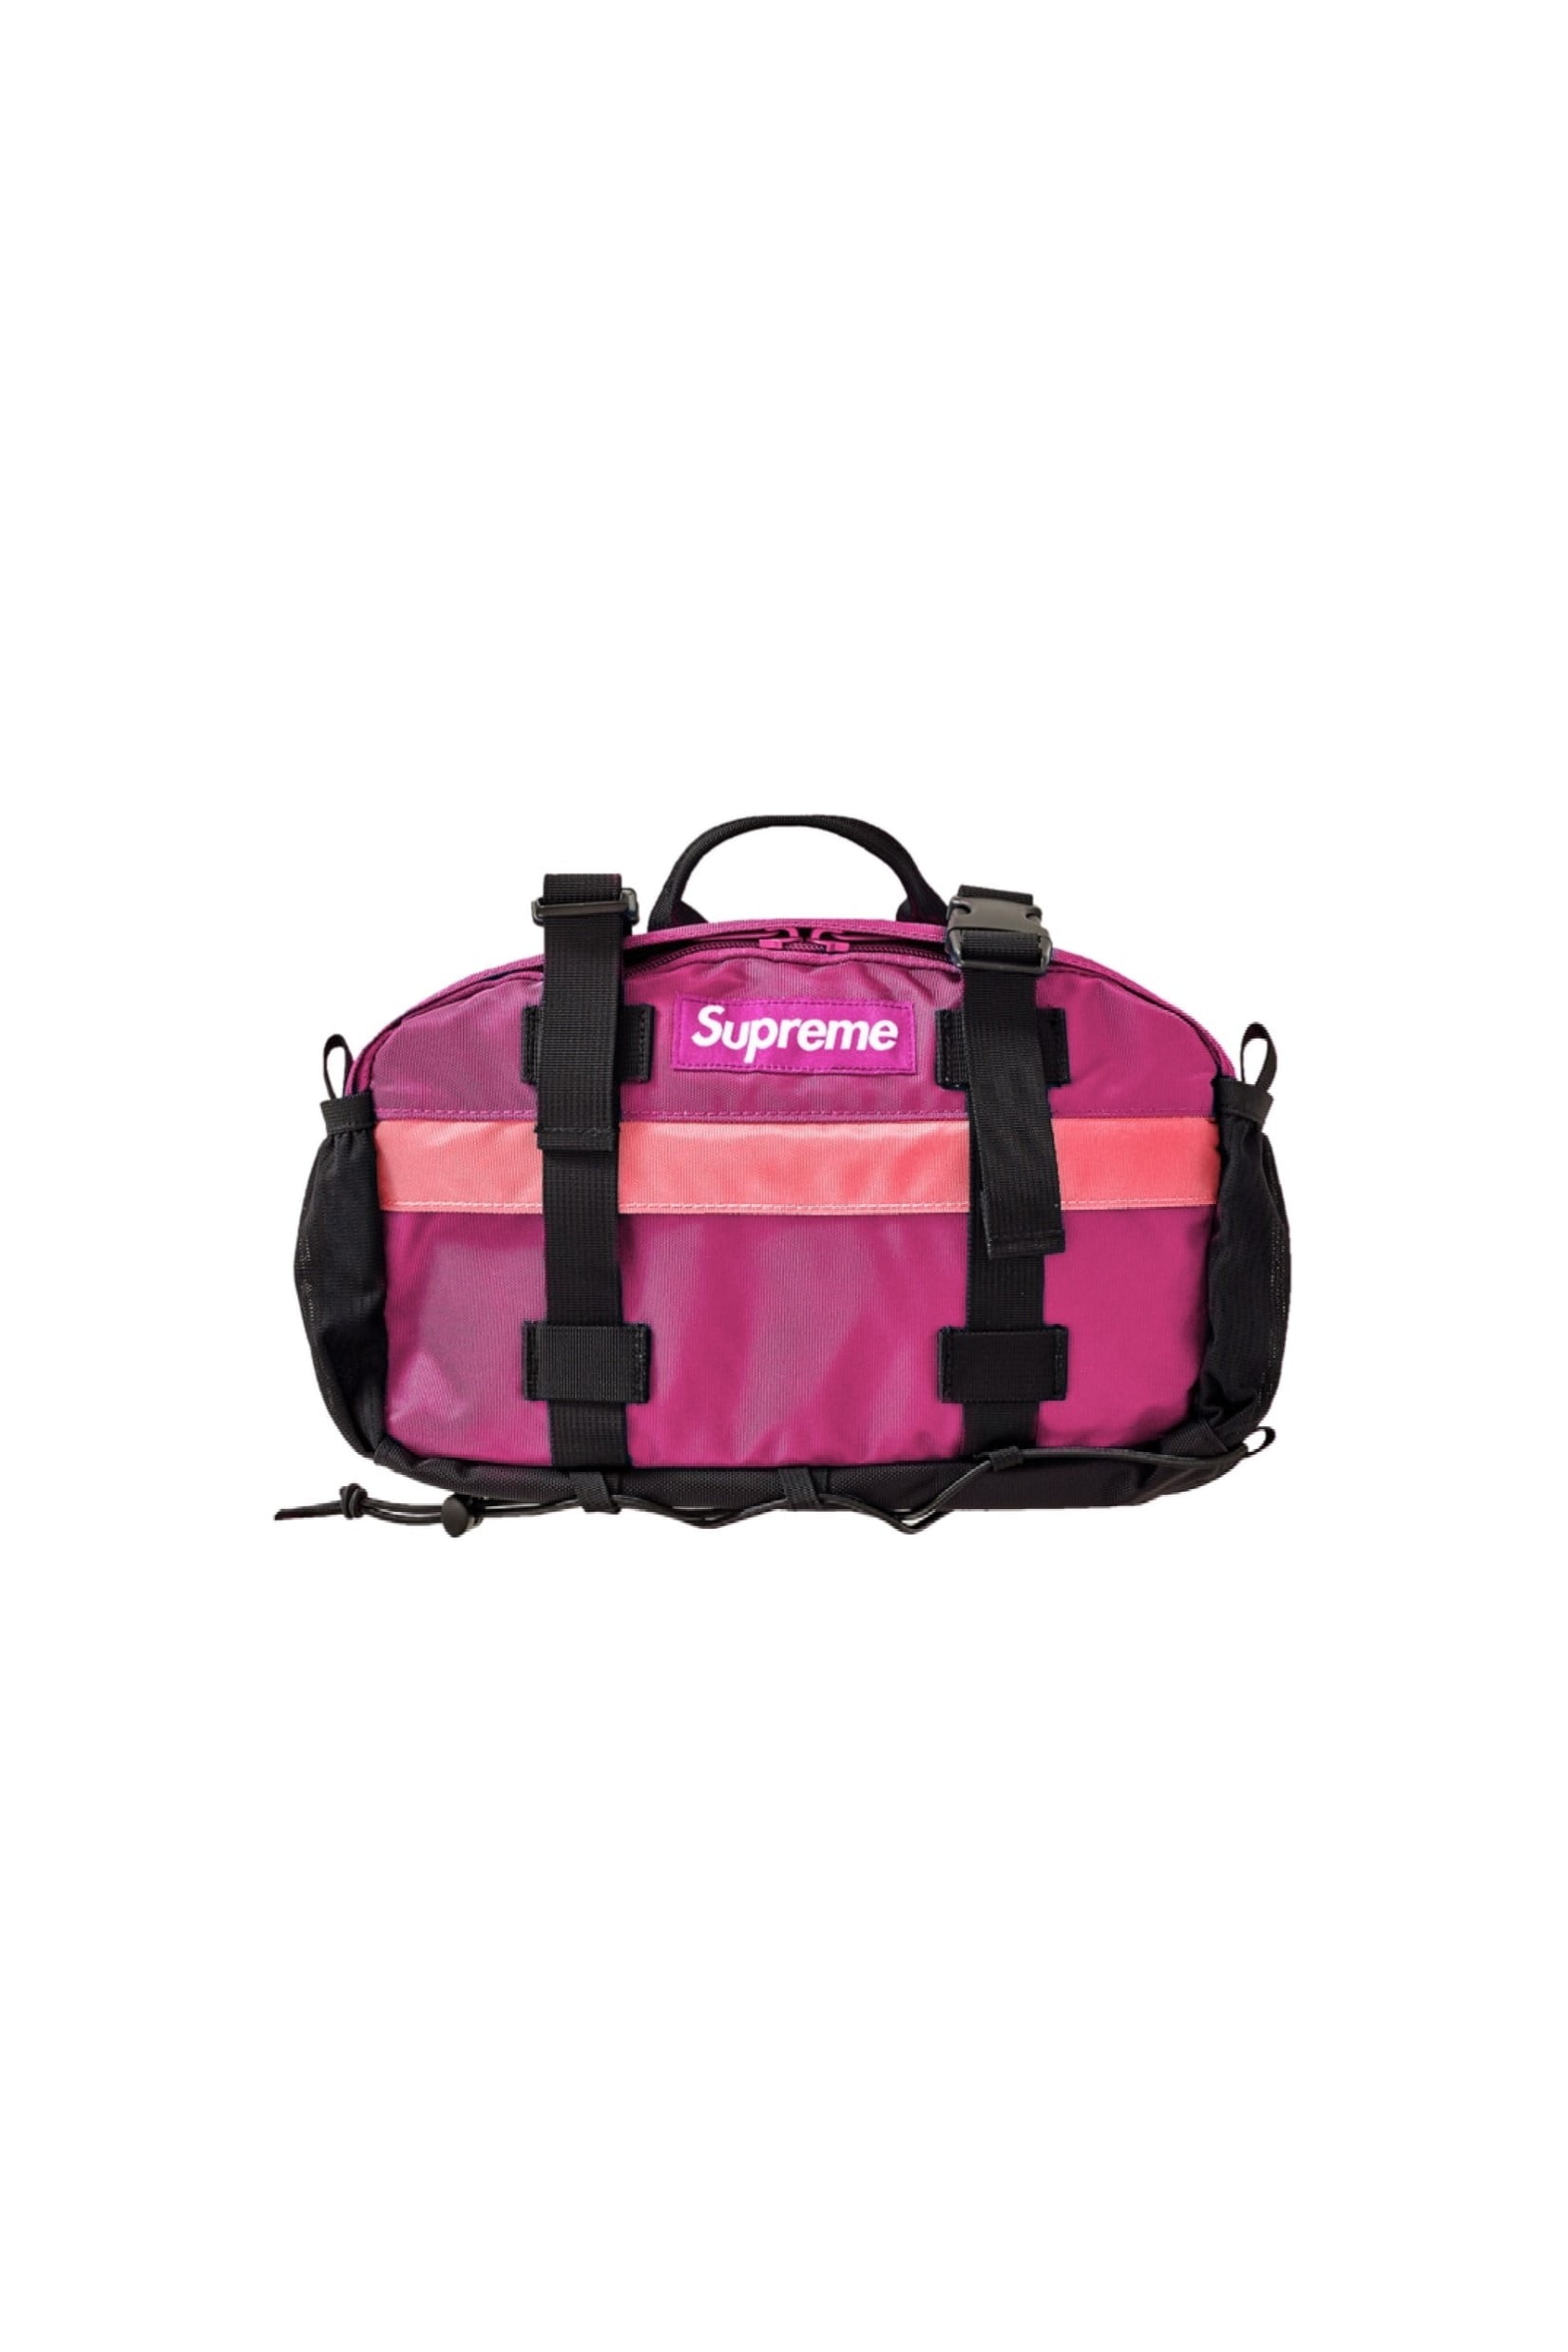 supreme fanny pack pink